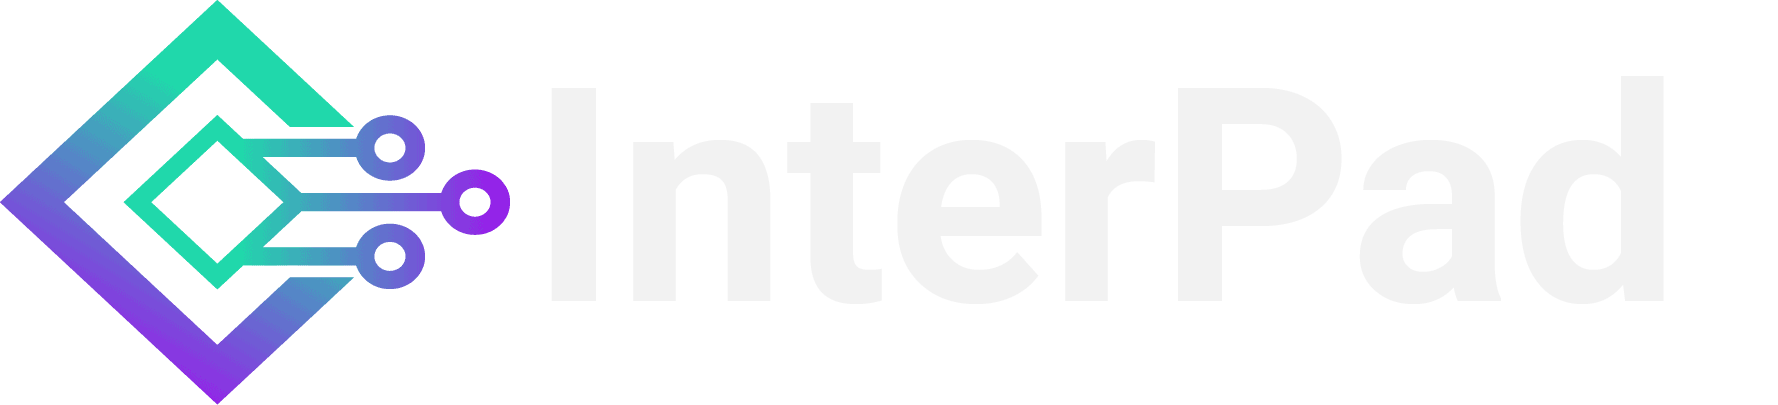 InterPad – Tech News & Reviews